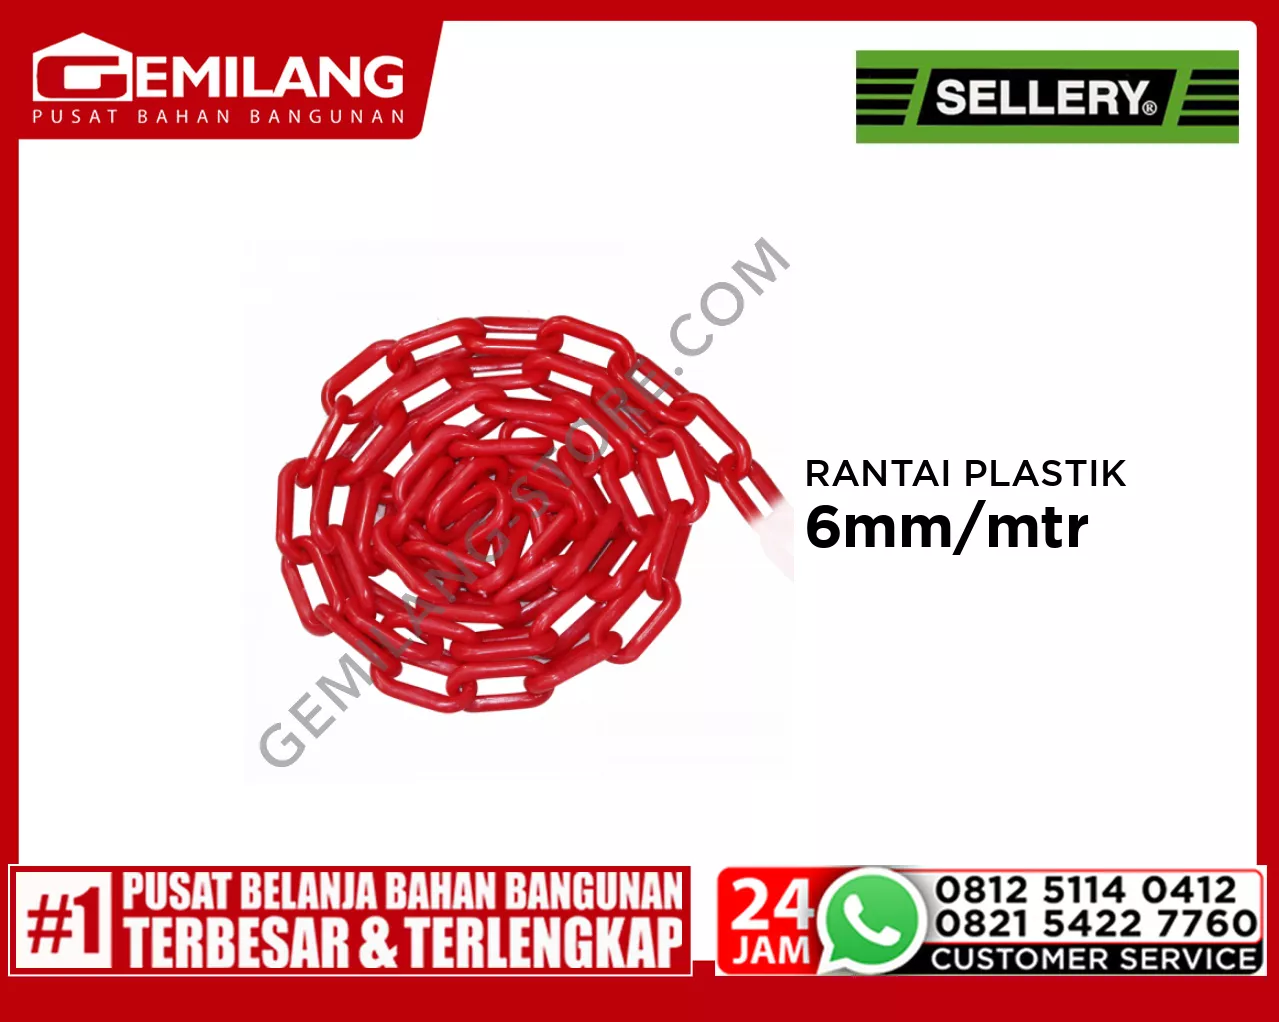 SELLERY RANTAI PLASTIK RED 6mm/mtr @50mtr